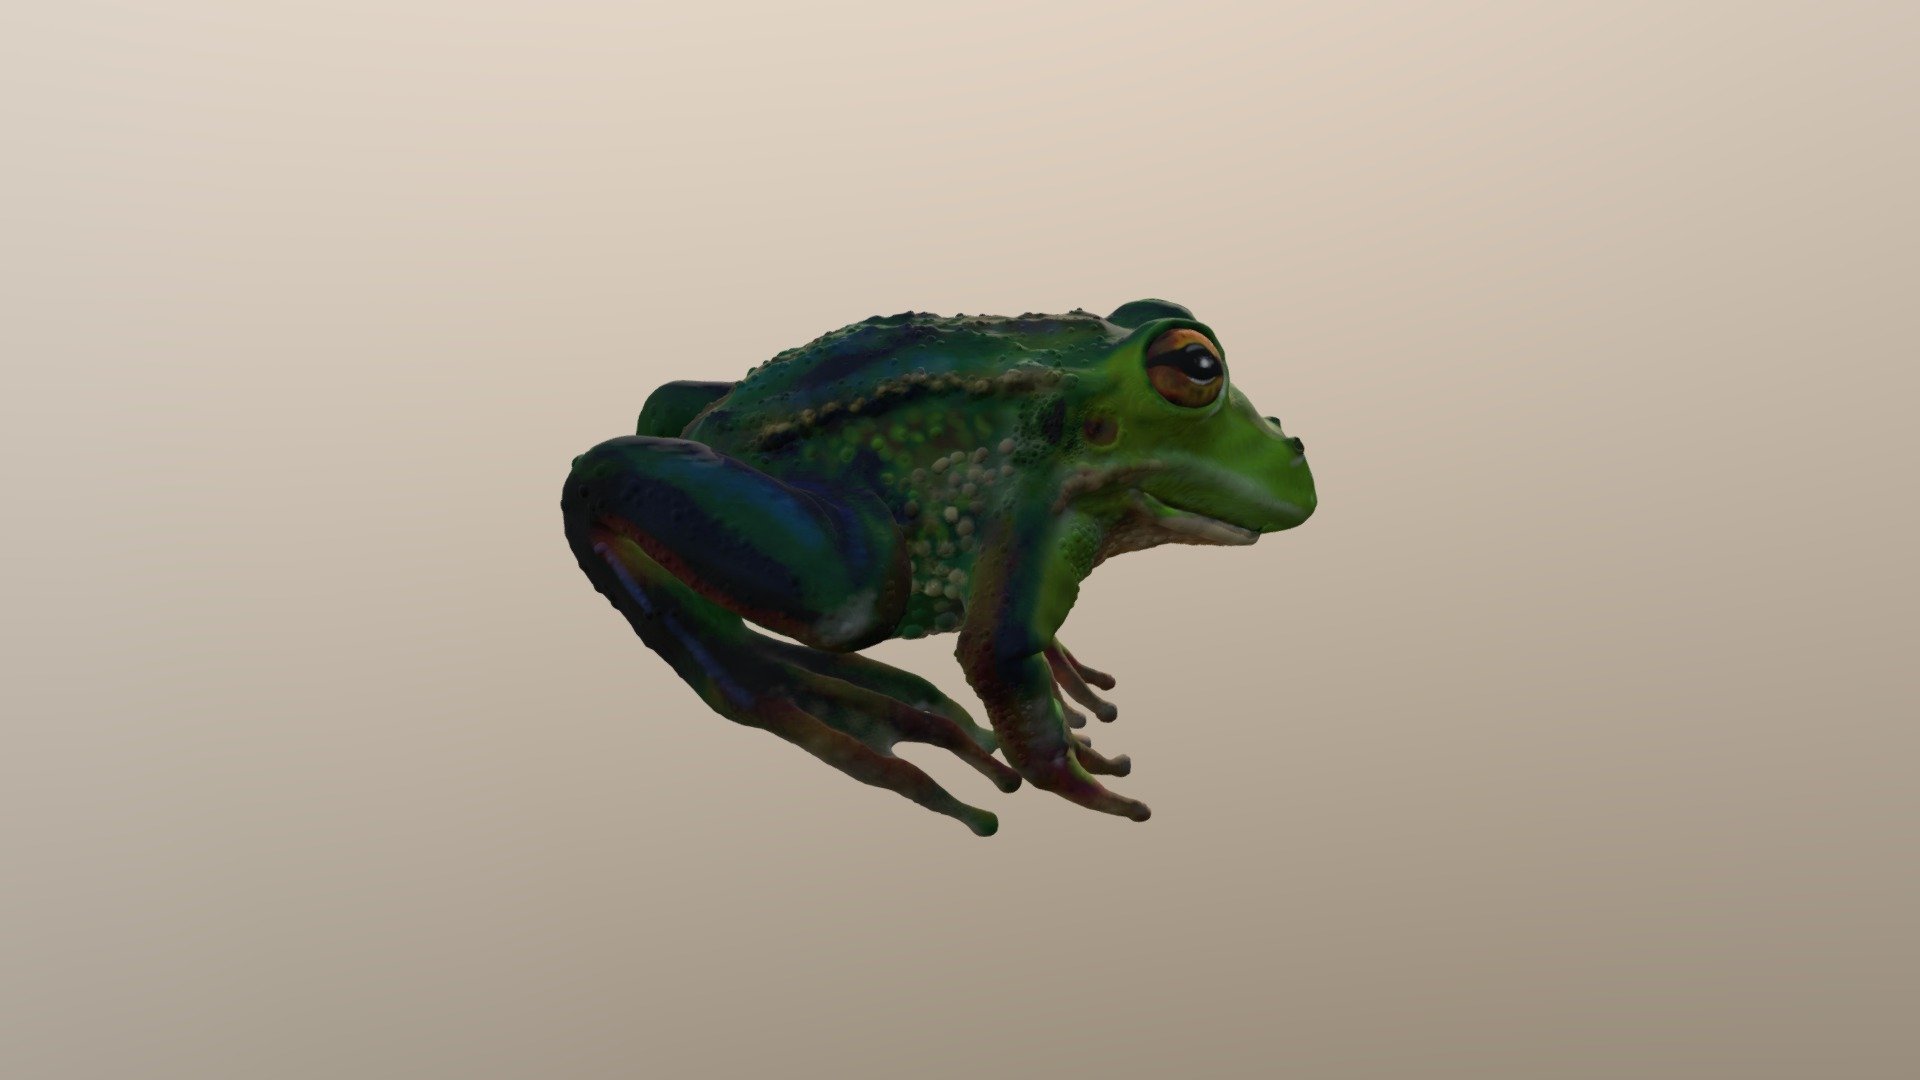 SculptrVR Frog